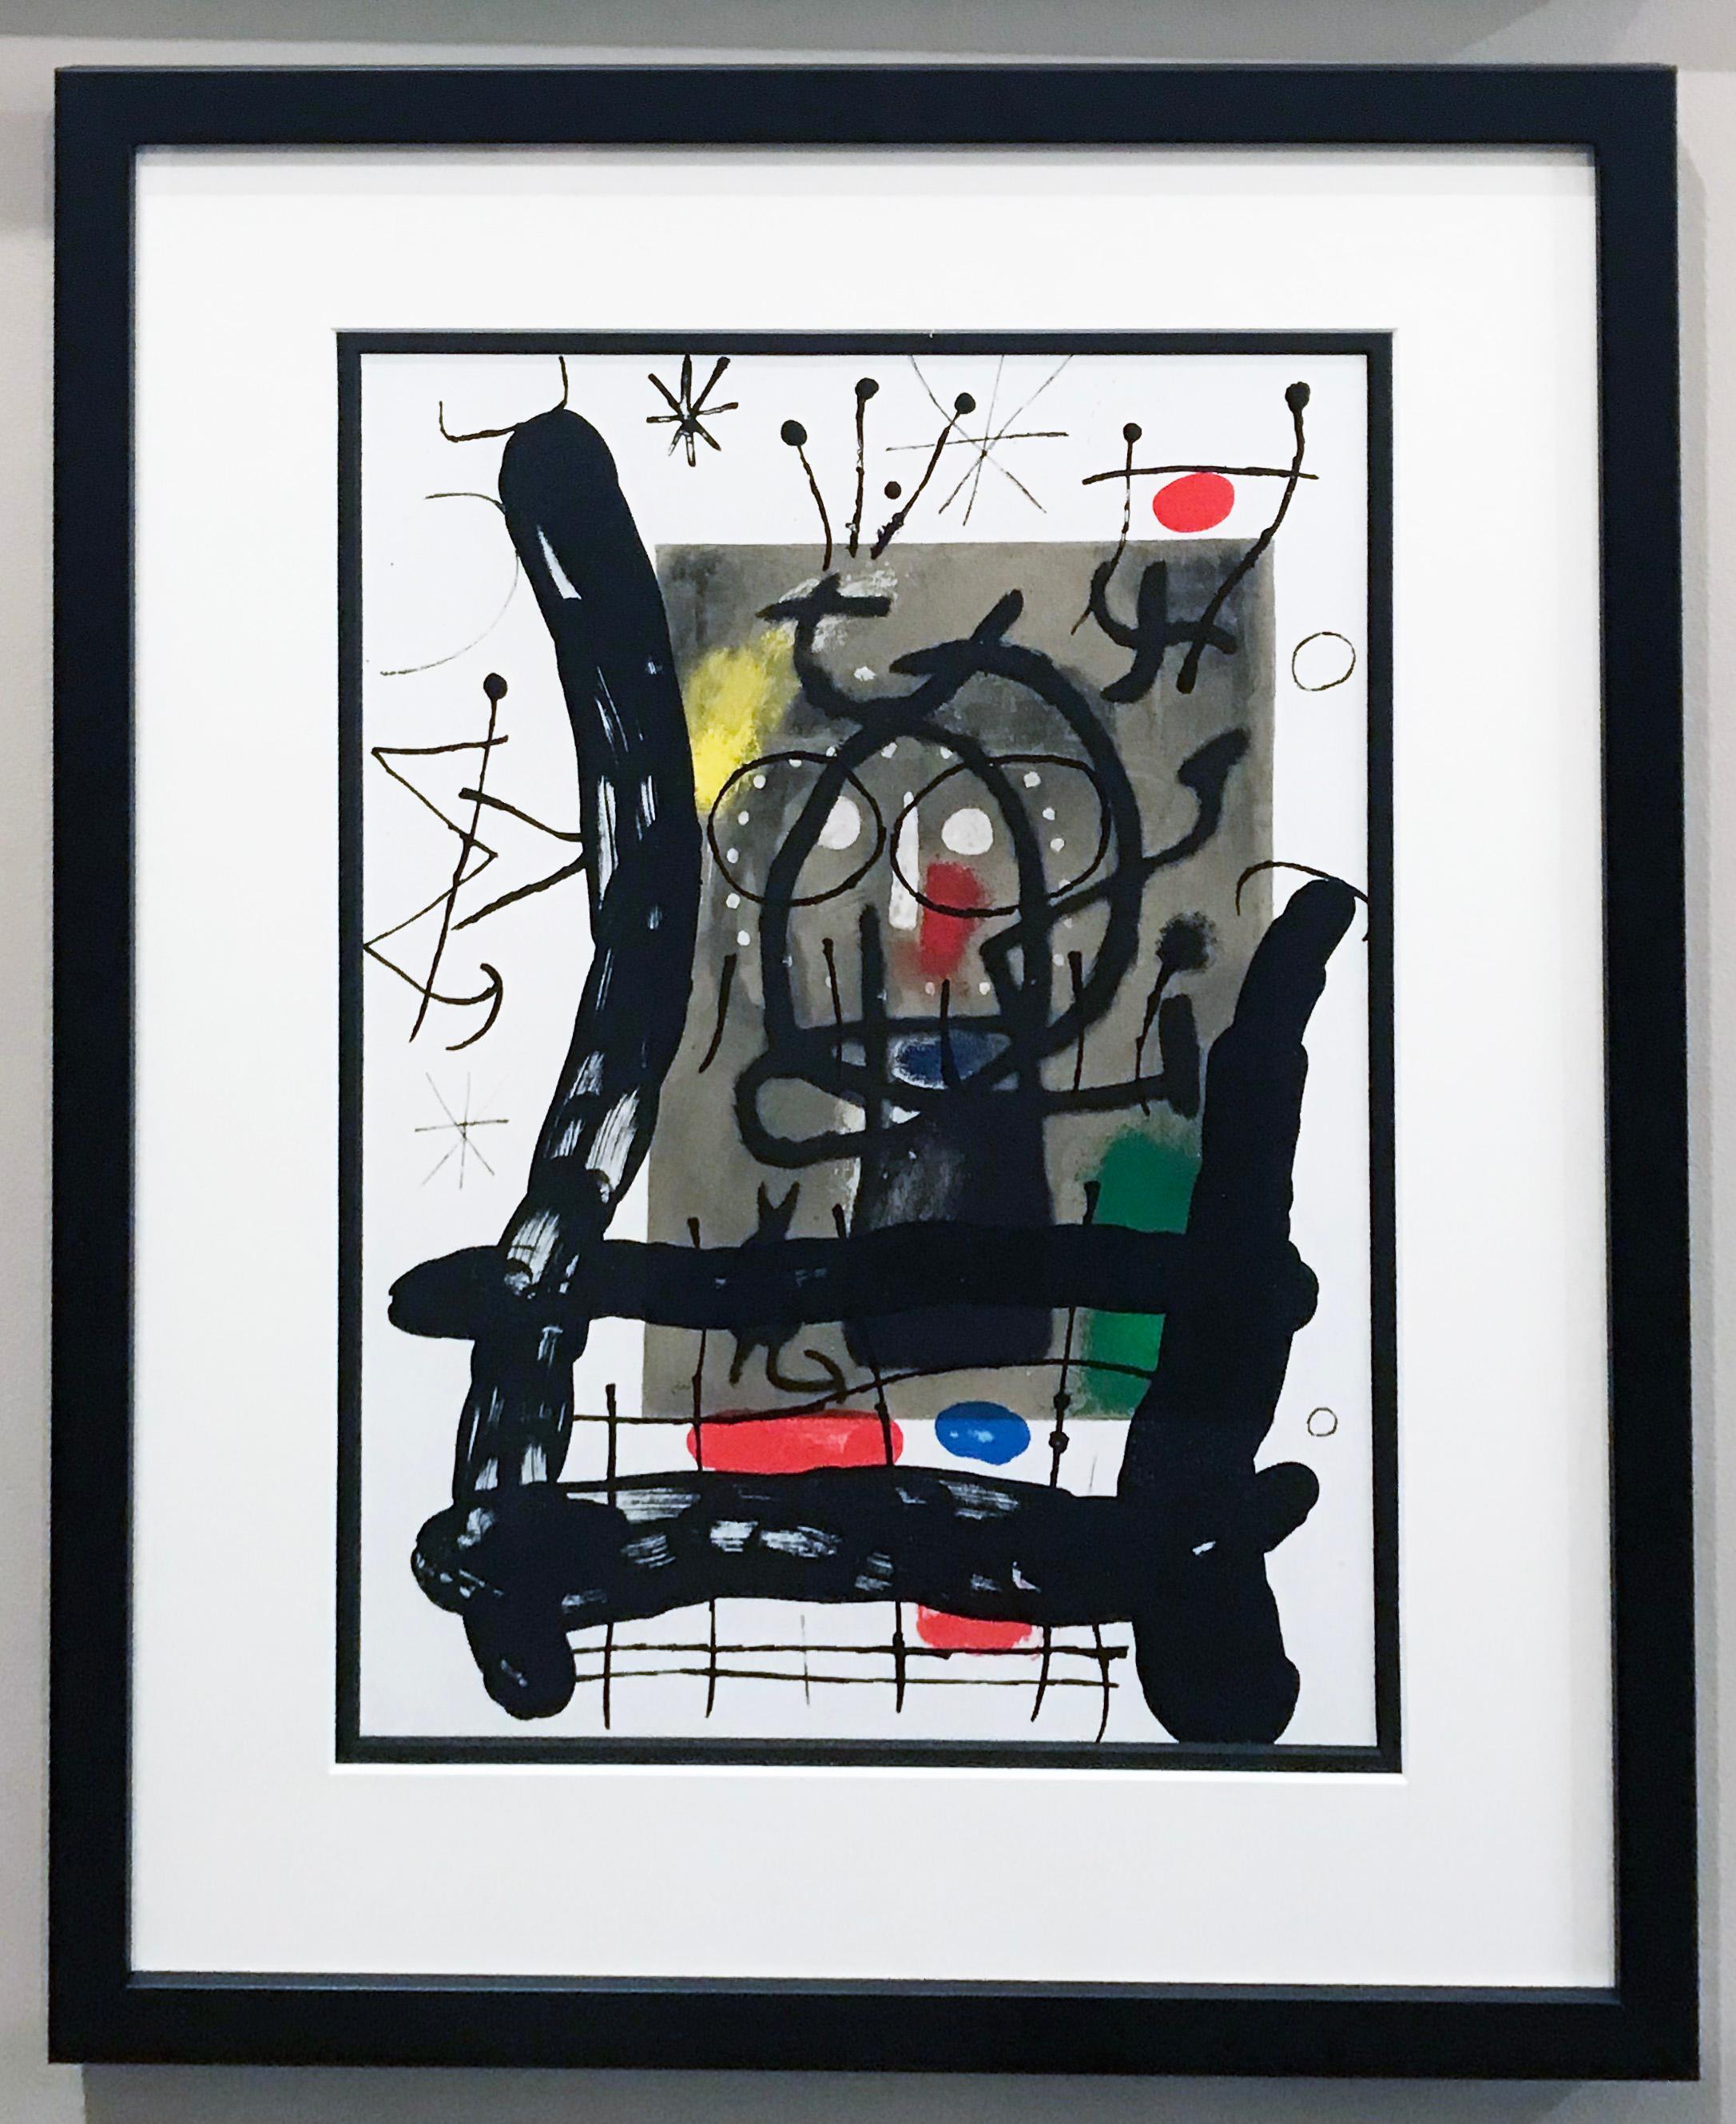 Plate 18, from 1965 Peintures sur Cartons - Print by Joan Miró